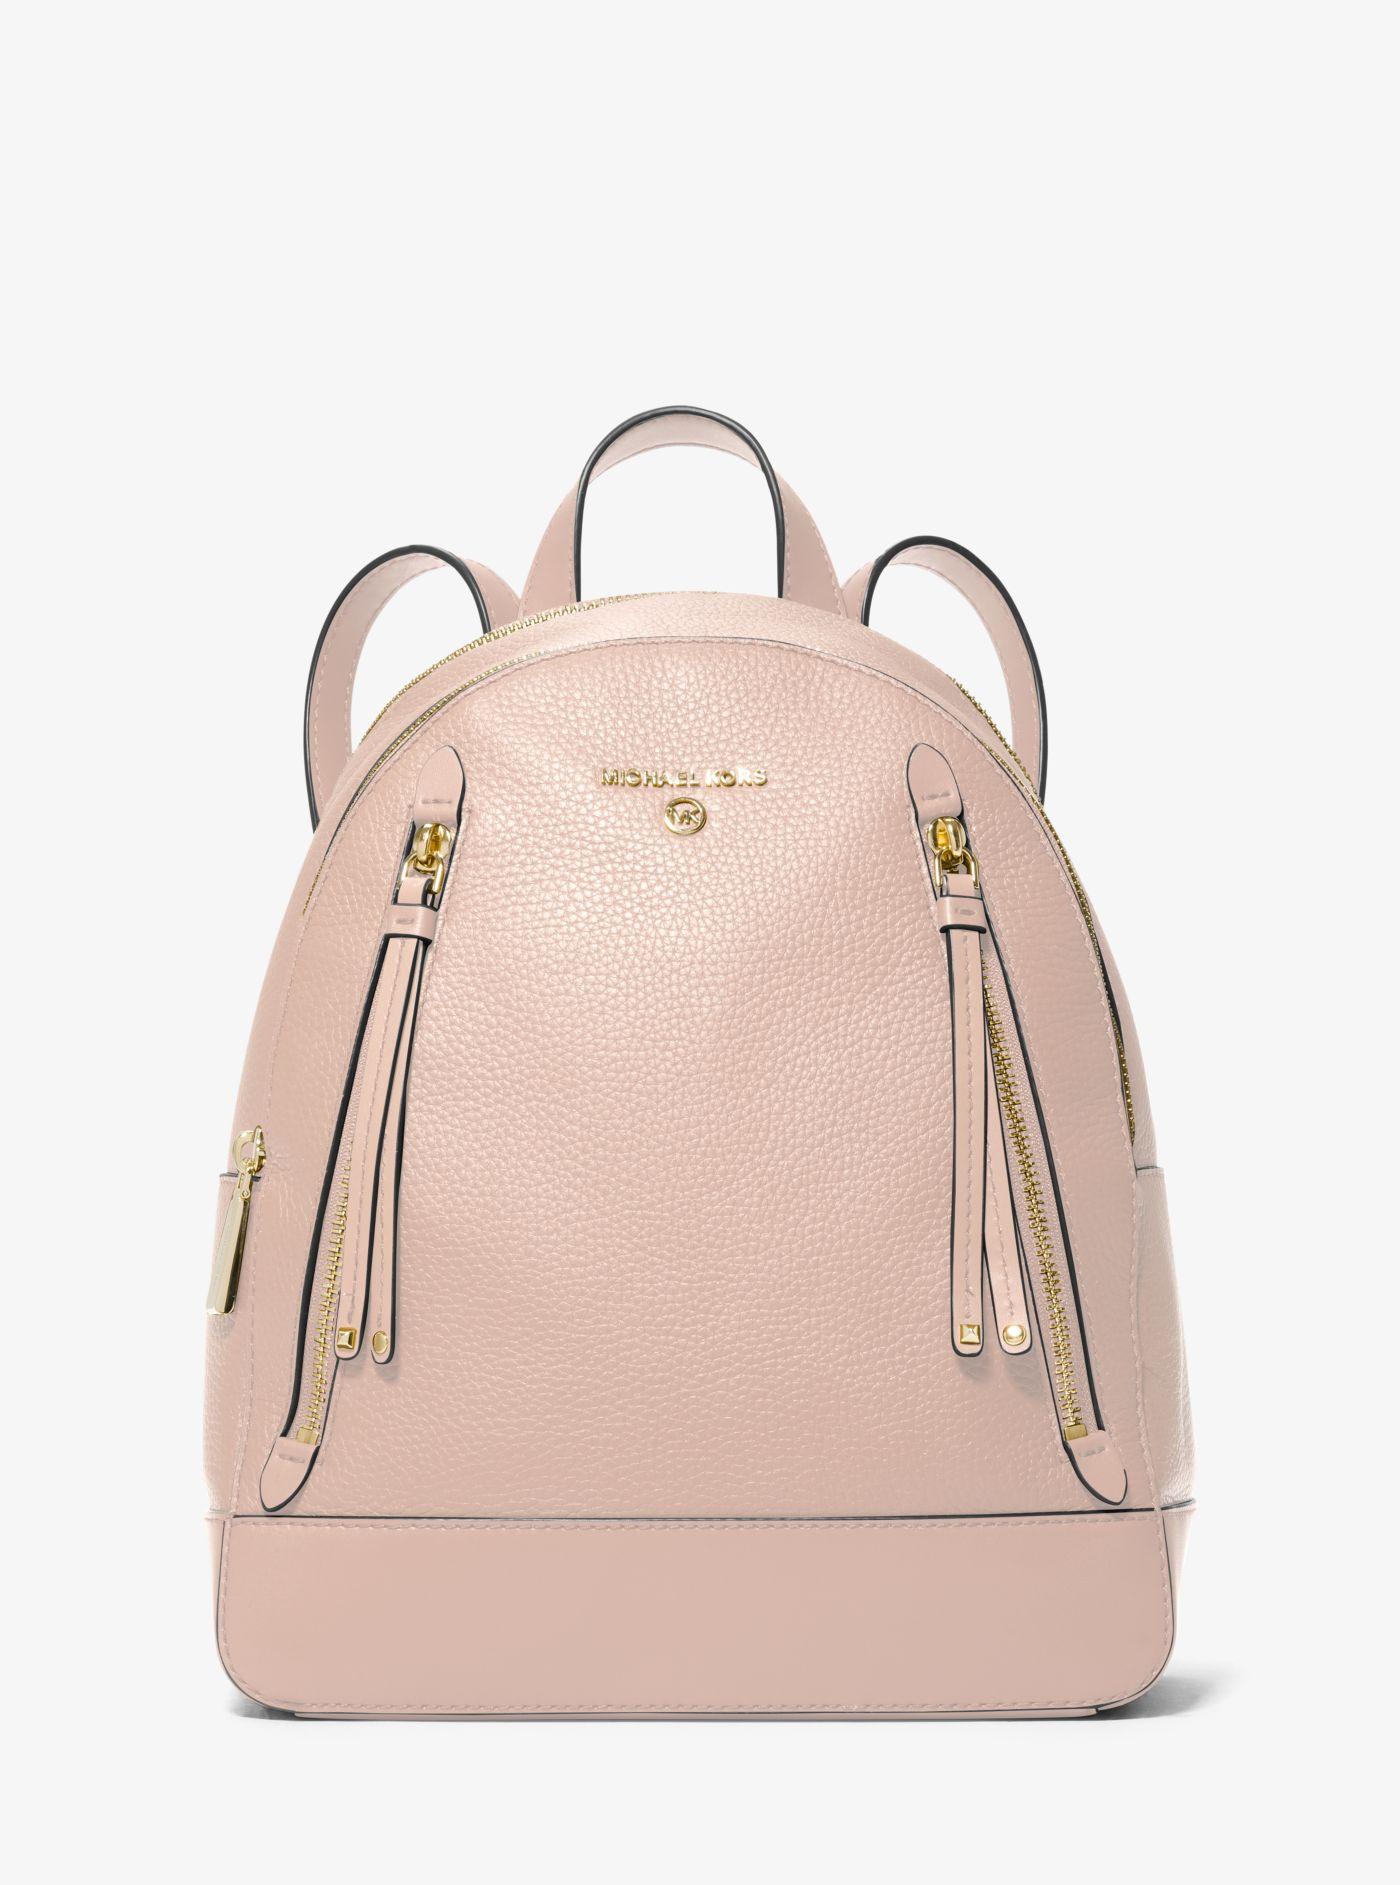 Michael Kors Brooklyn Medium Pebbled Leather Backpack in Pink | Lyst